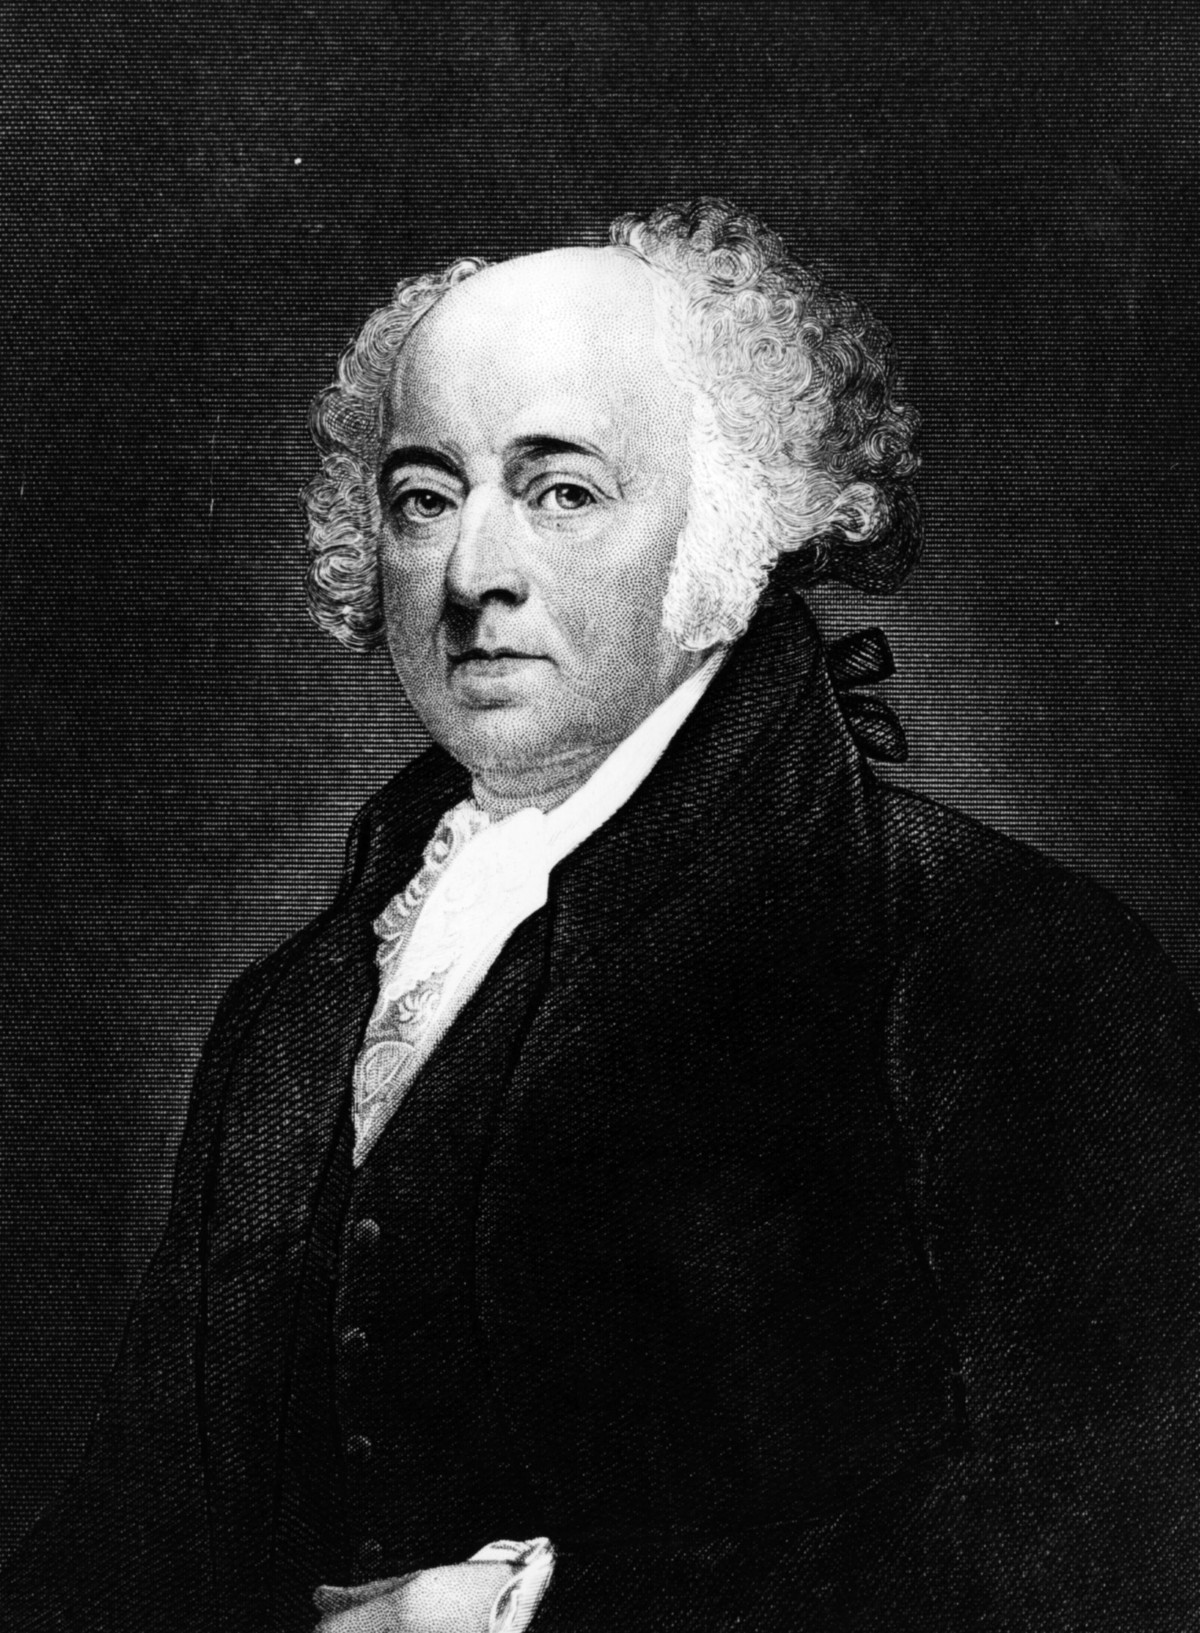 John Adams May Have Broken the Jefferson-Hemings Affair First